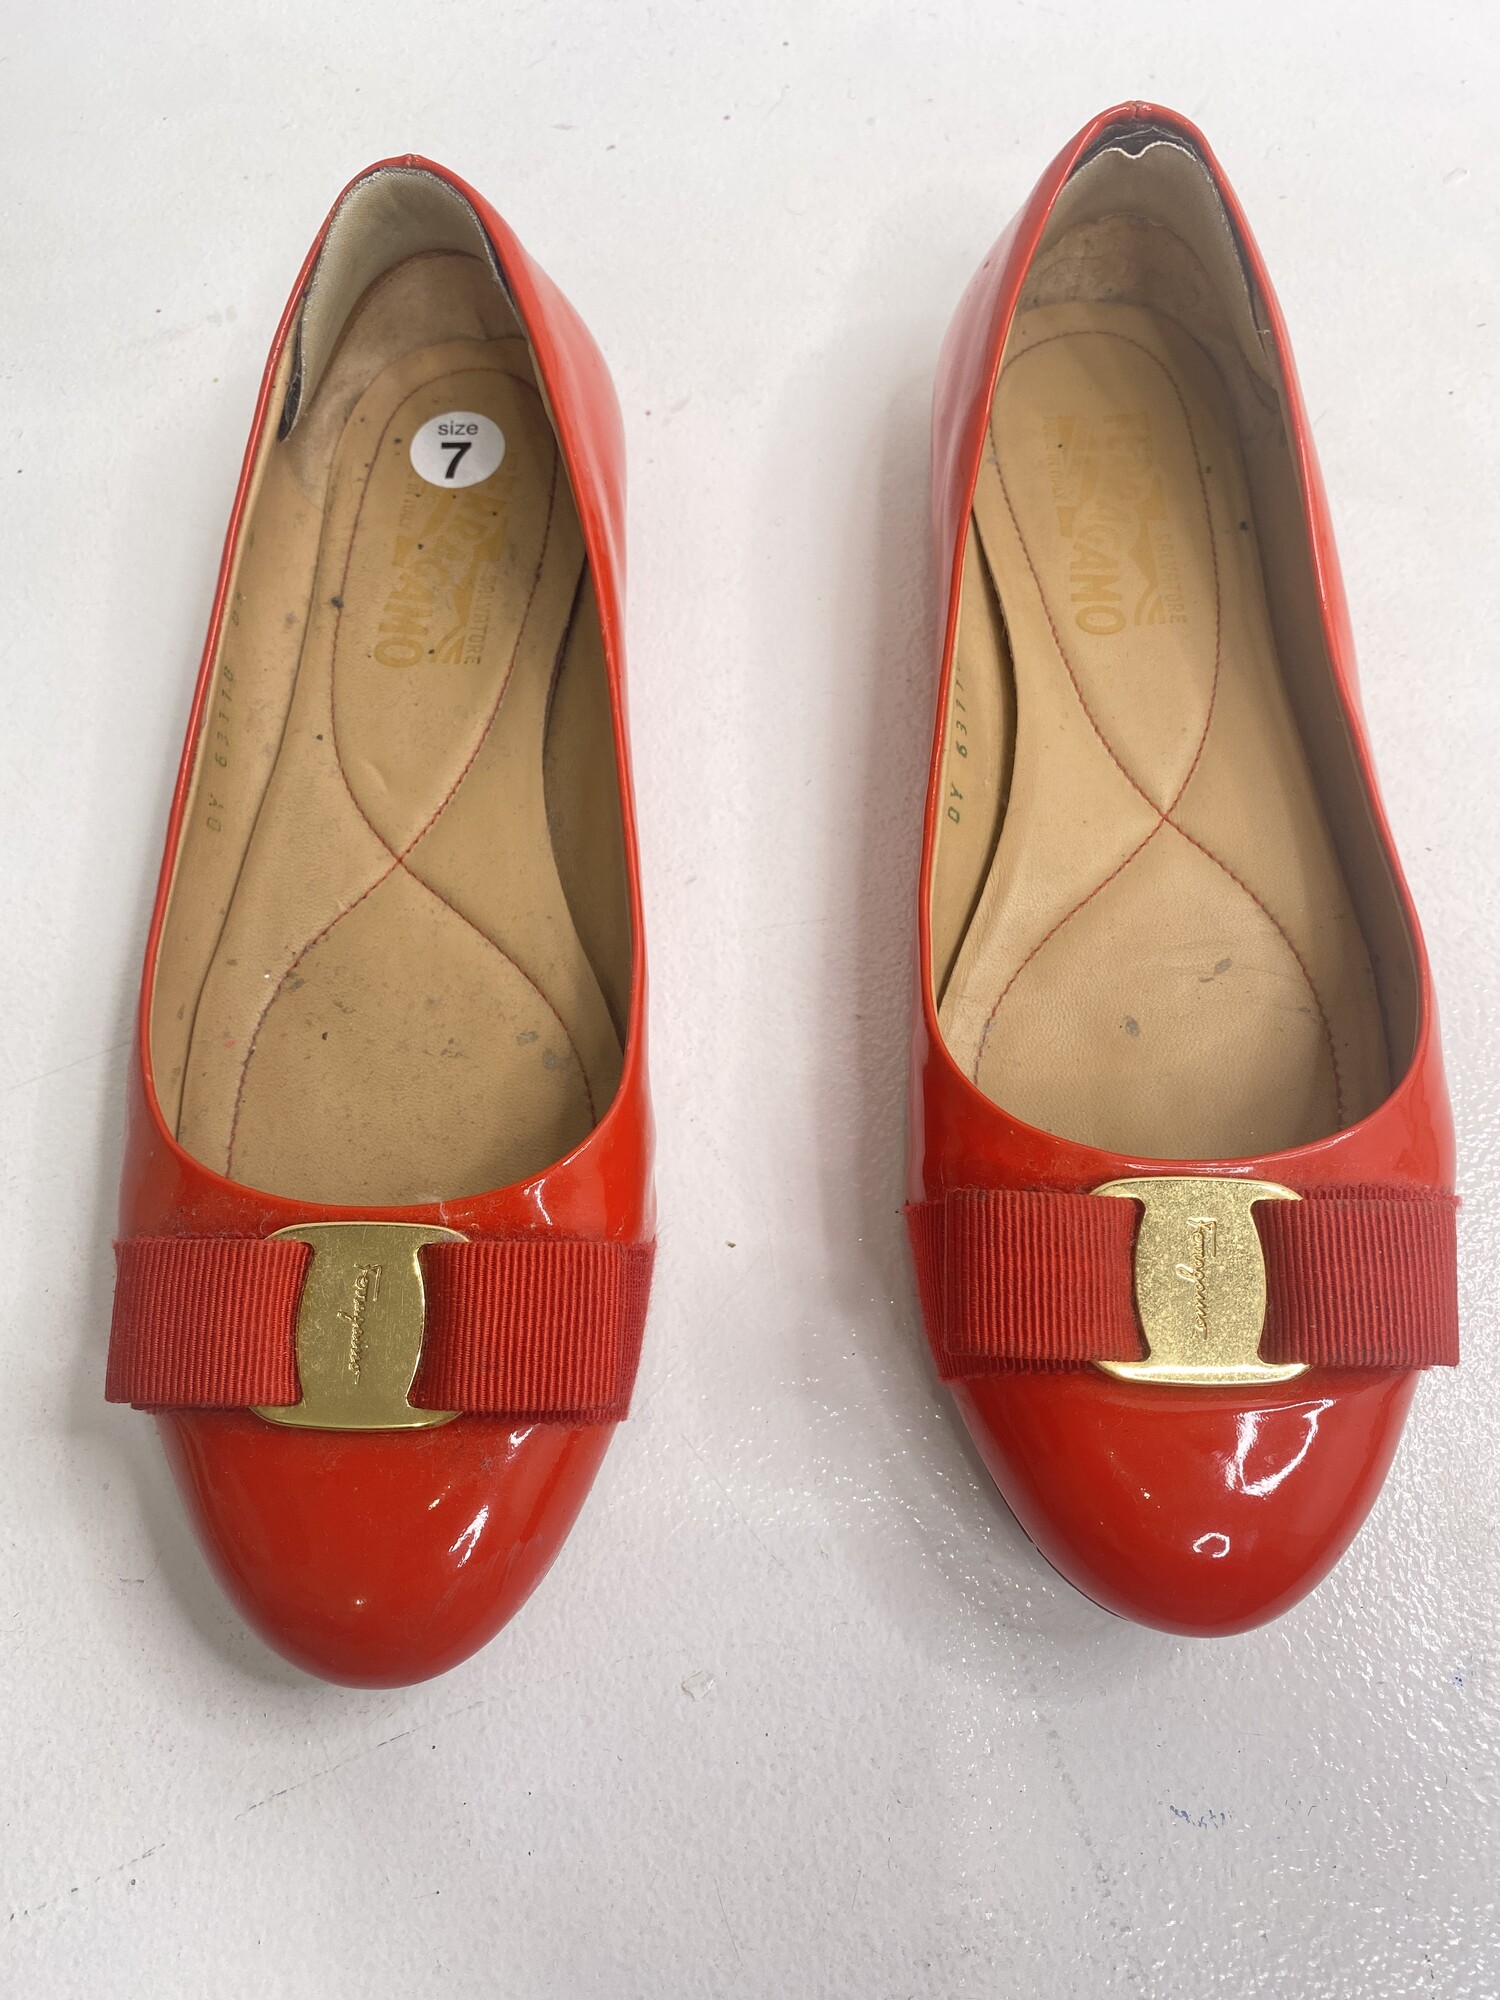 Ferragamo Flats, Size: 38, Color: Red